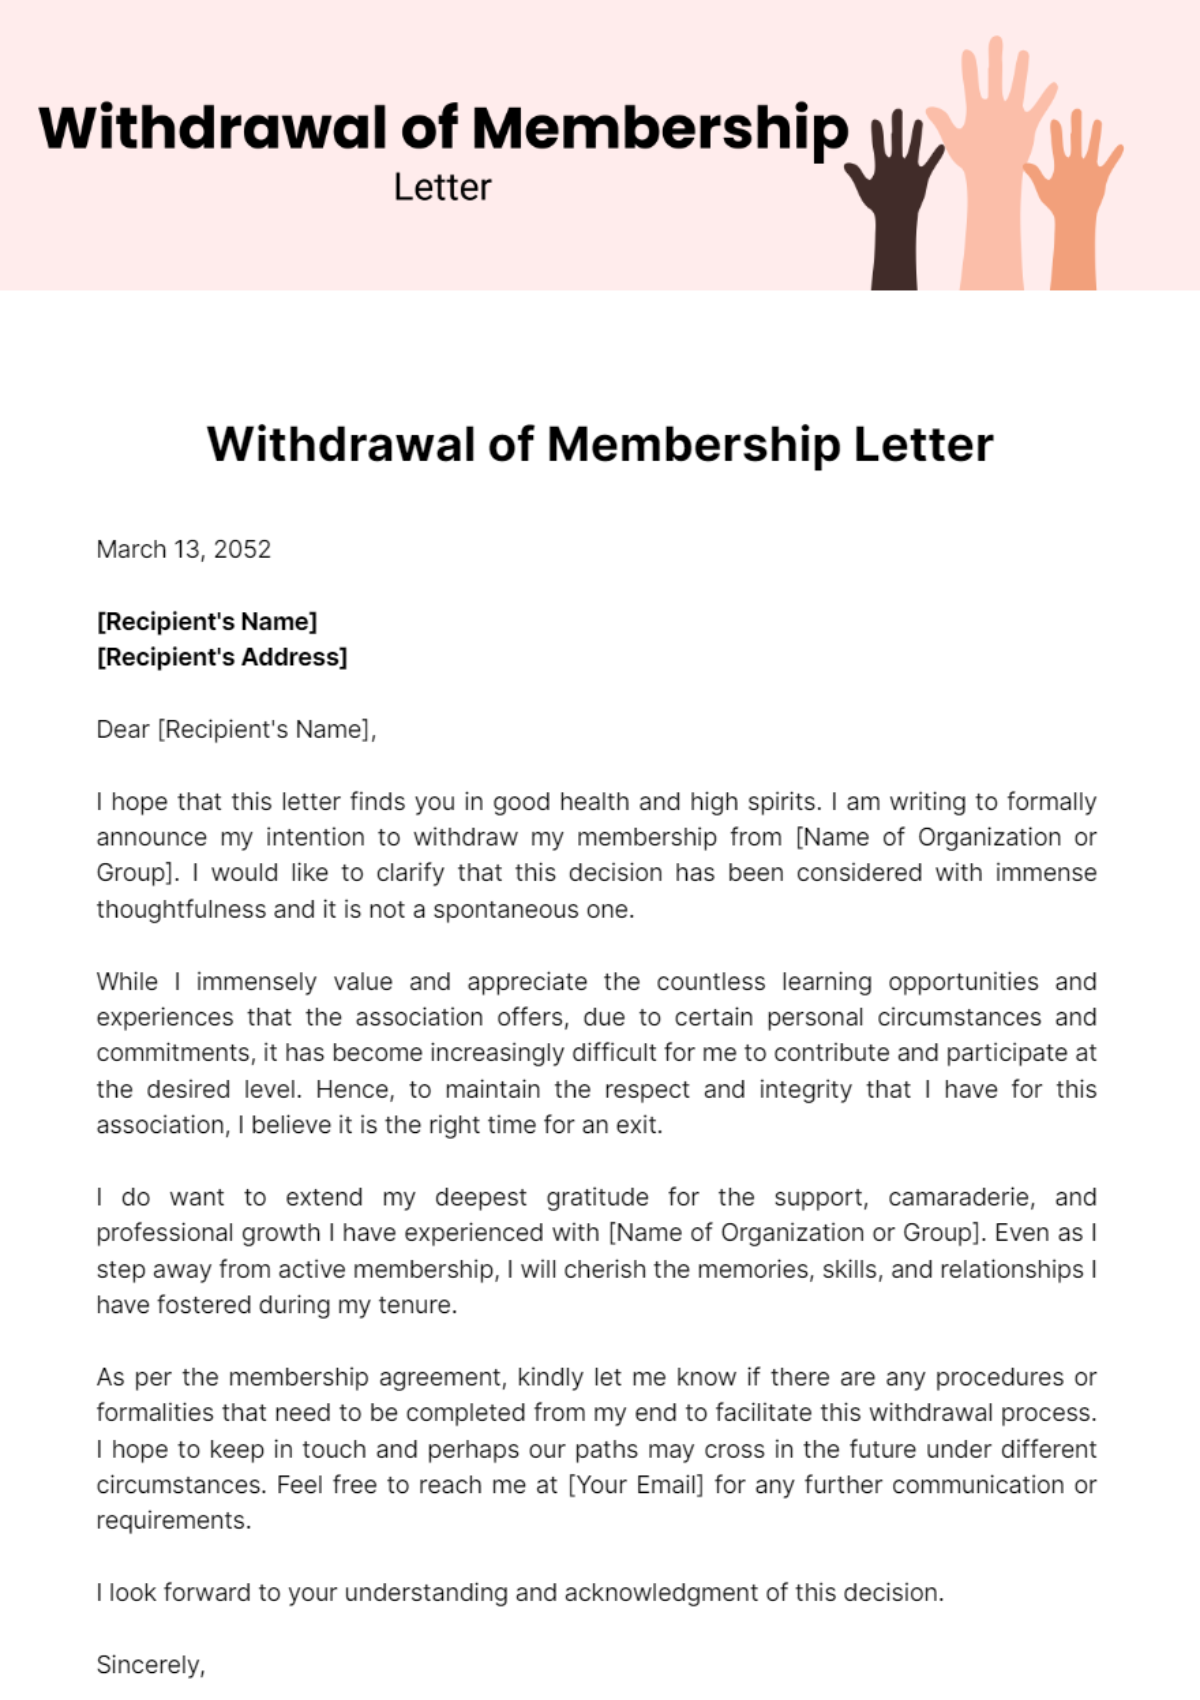 Free Withdrawal of Membership Letter Template